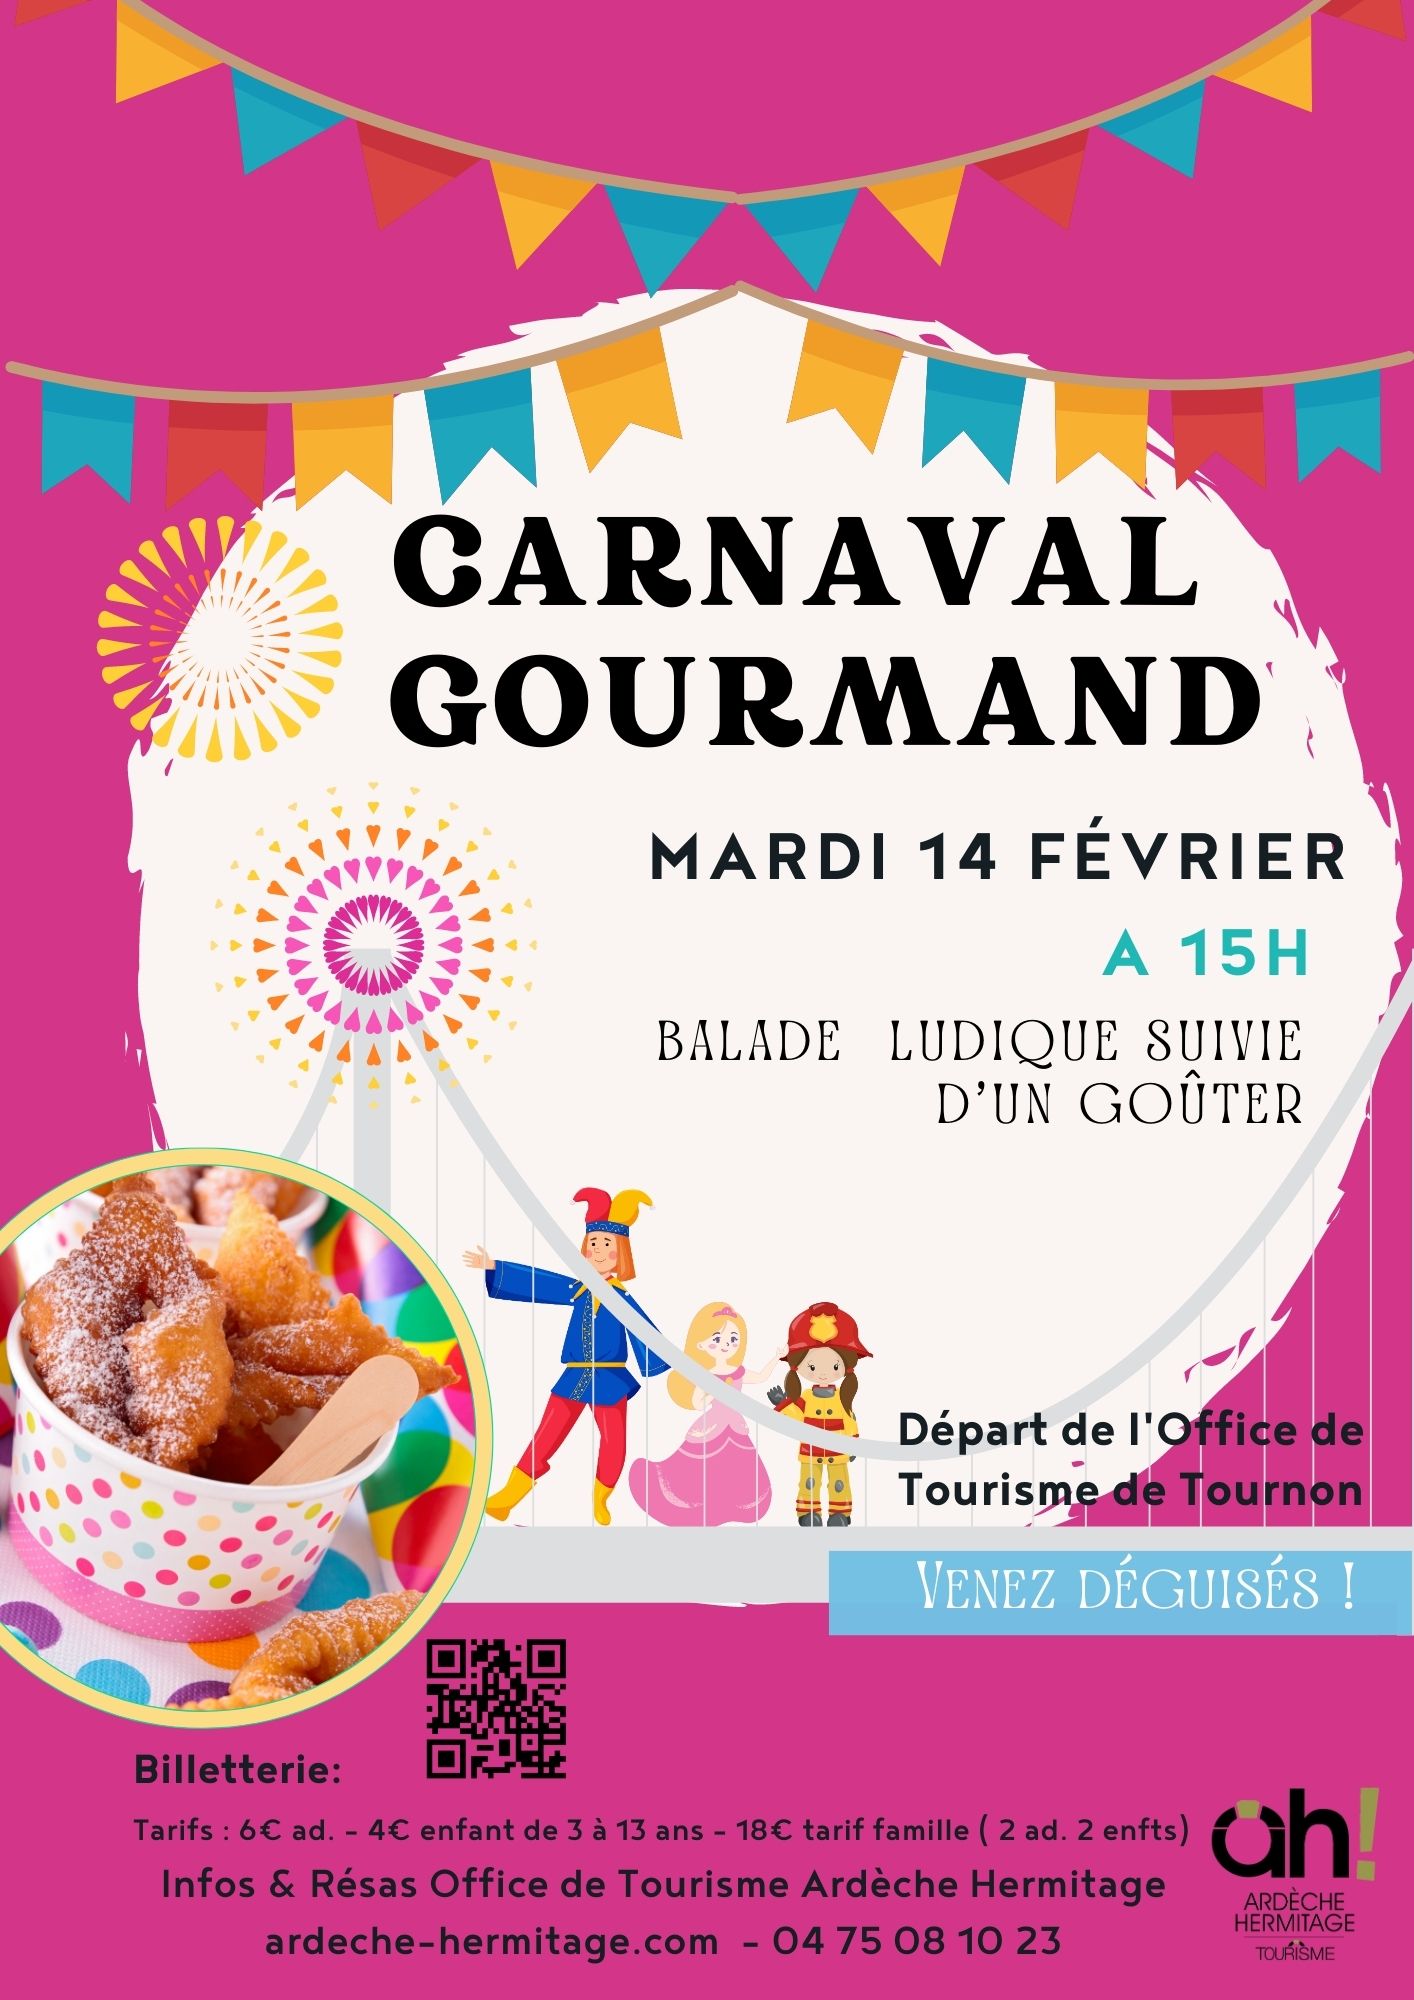 CARNAVAL GOURMAND. Samedi 14 février. Organisé par Ardèche Hermitage Tourisme.